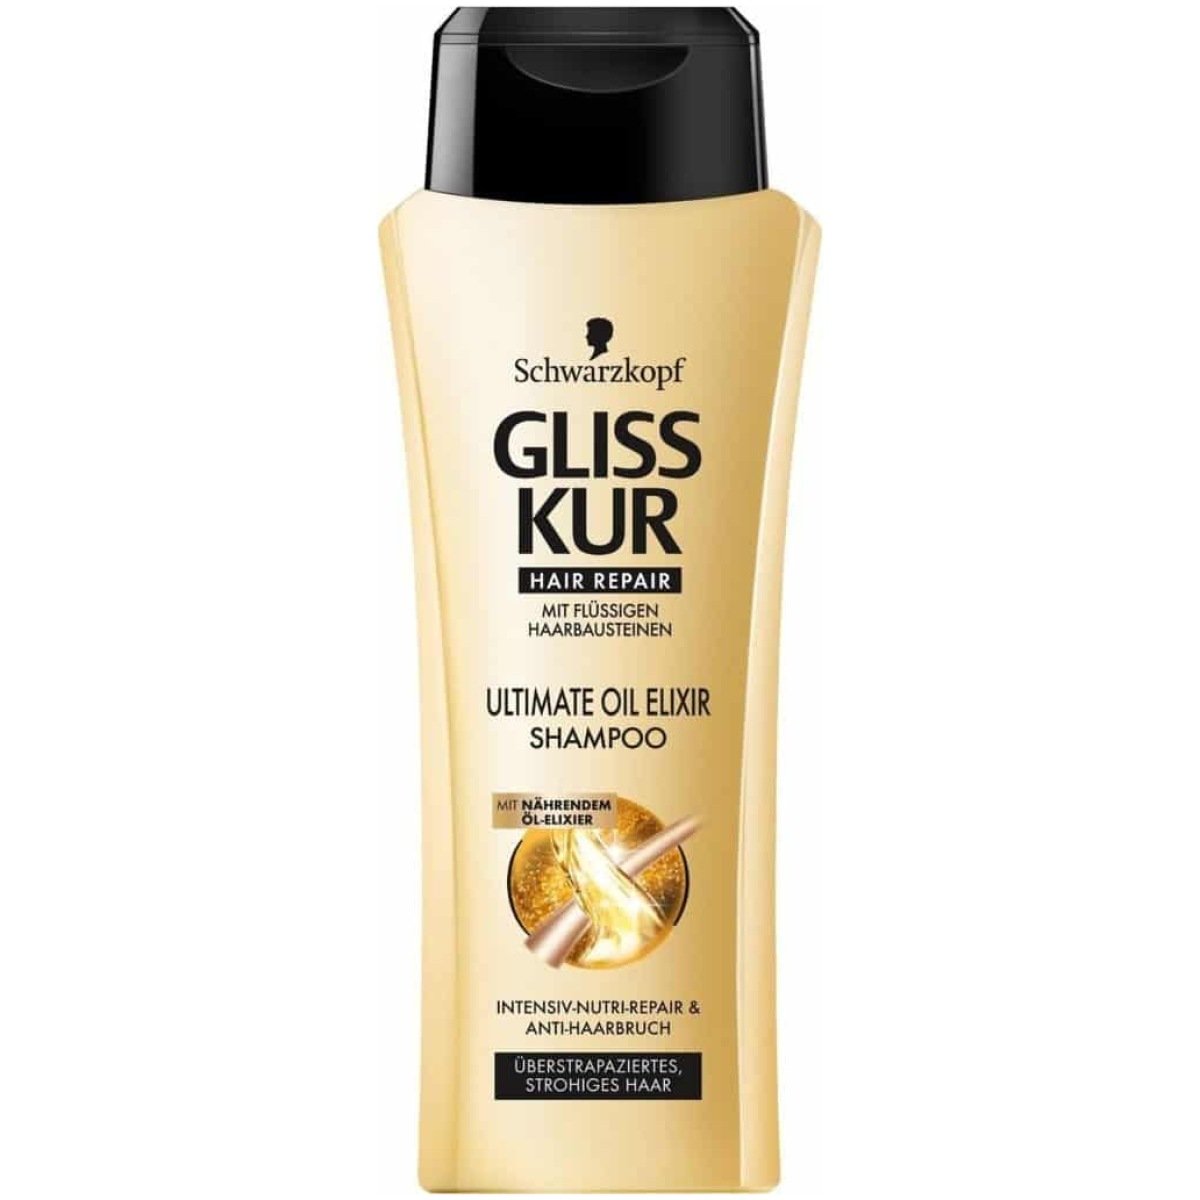 Schwarzkopf Gliss Kur Ultimate Oil Elixir Hair Shampoo 400ml